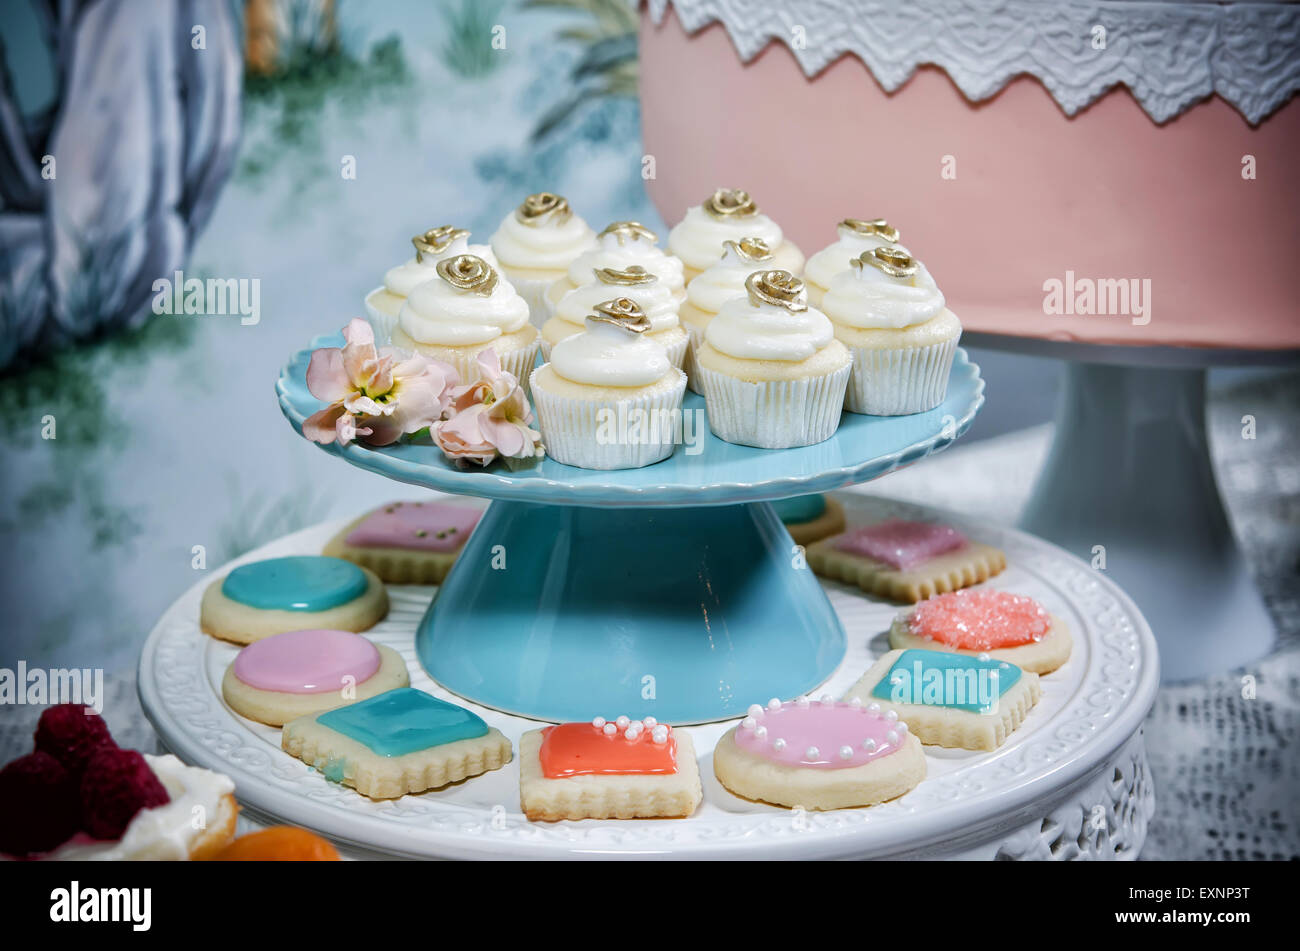 Image of beautifully decorated wedding cupcakes Stock Photo